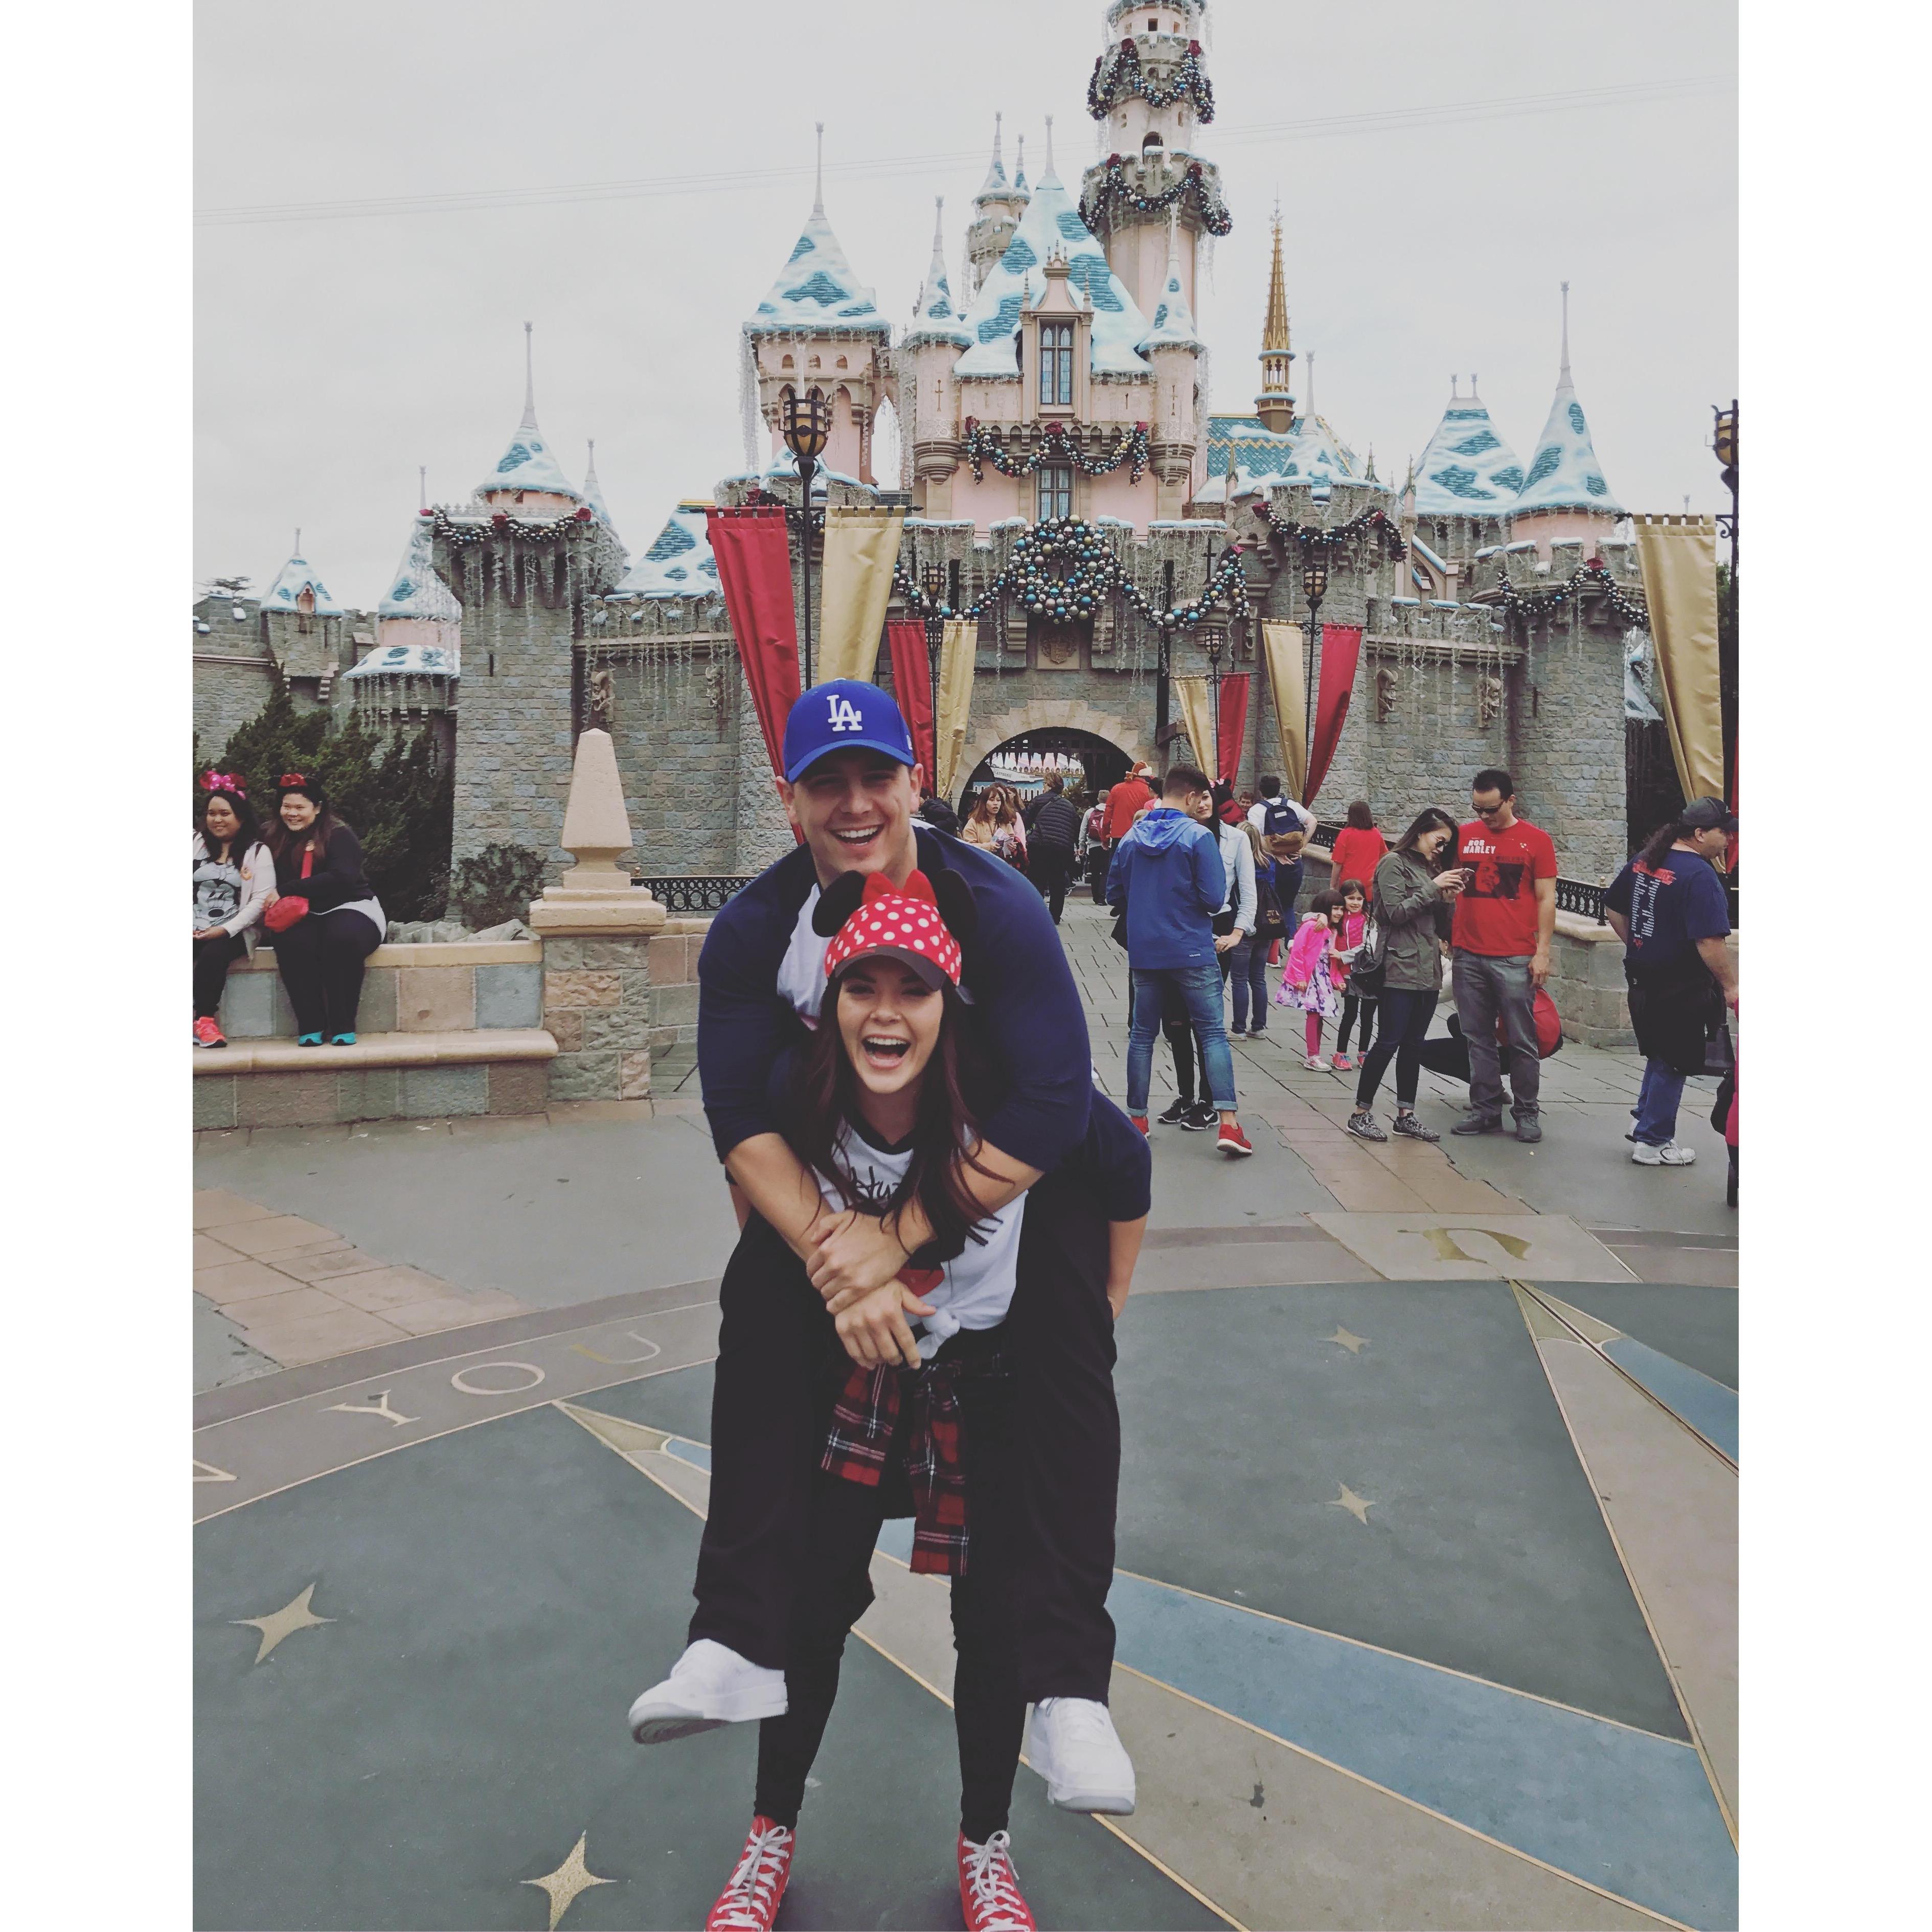 Jp's first Disneyland trip